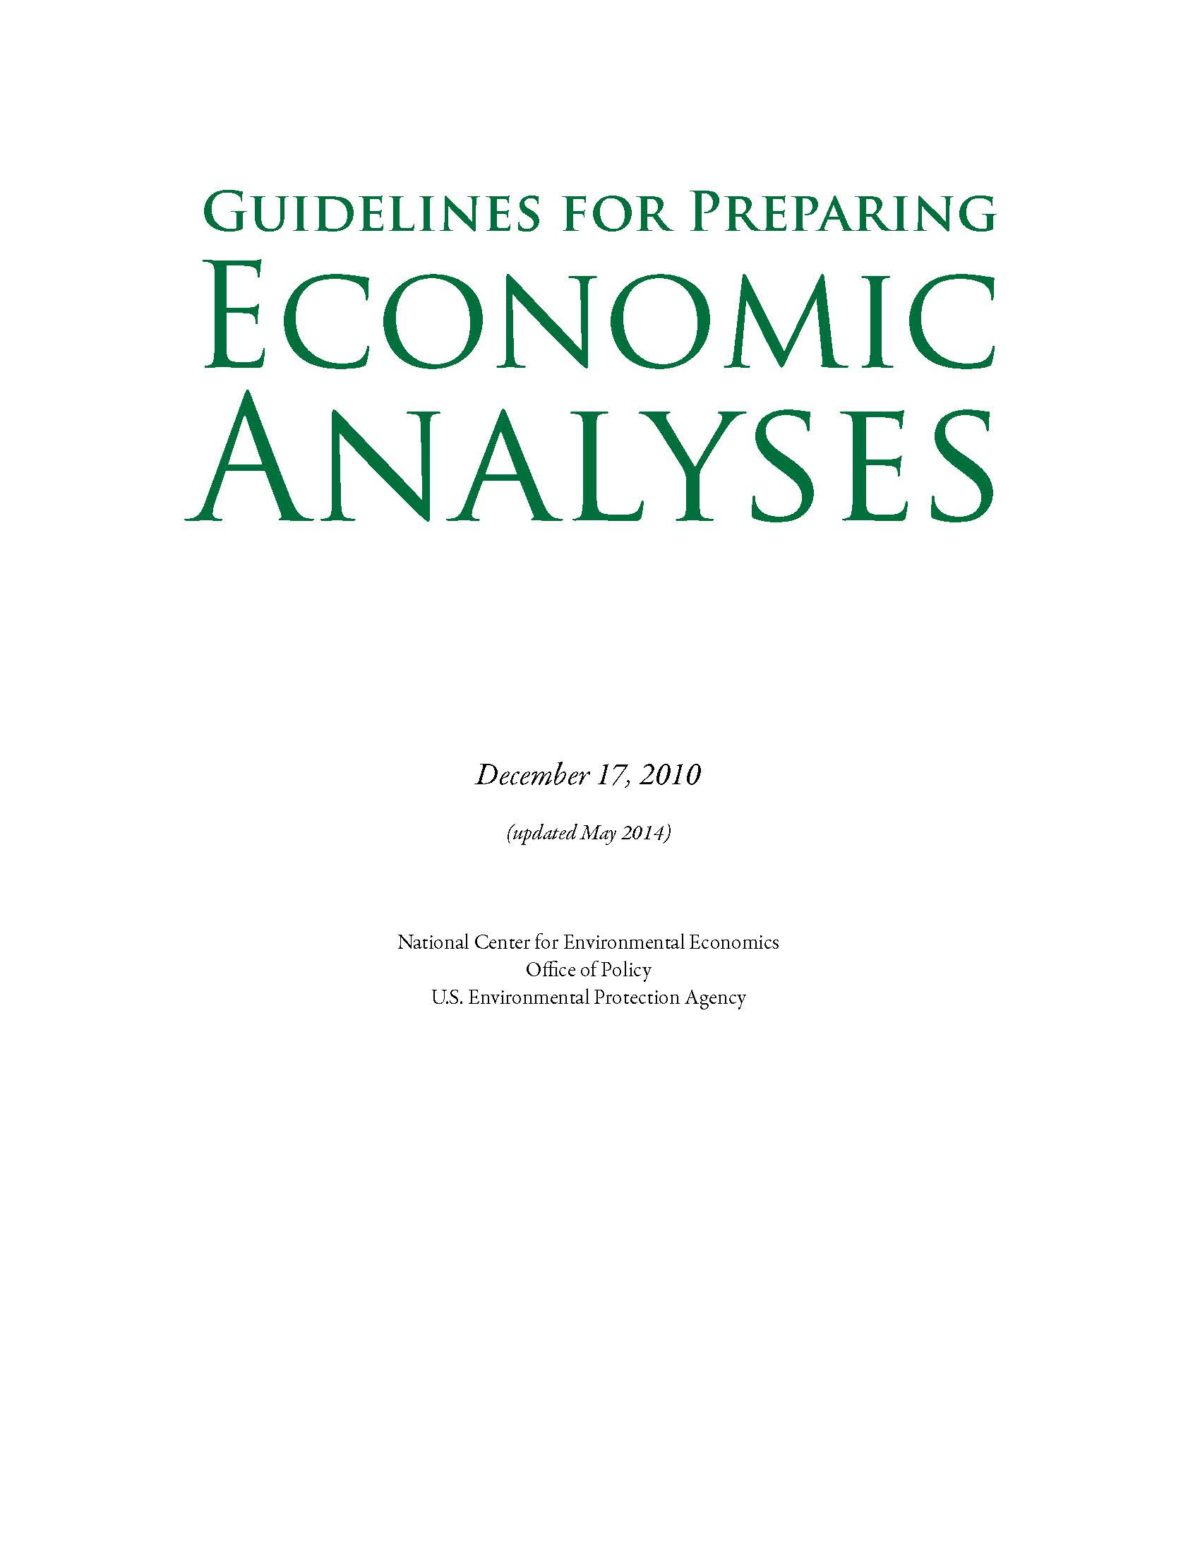 Guidelines for Preparing Economic Analyses